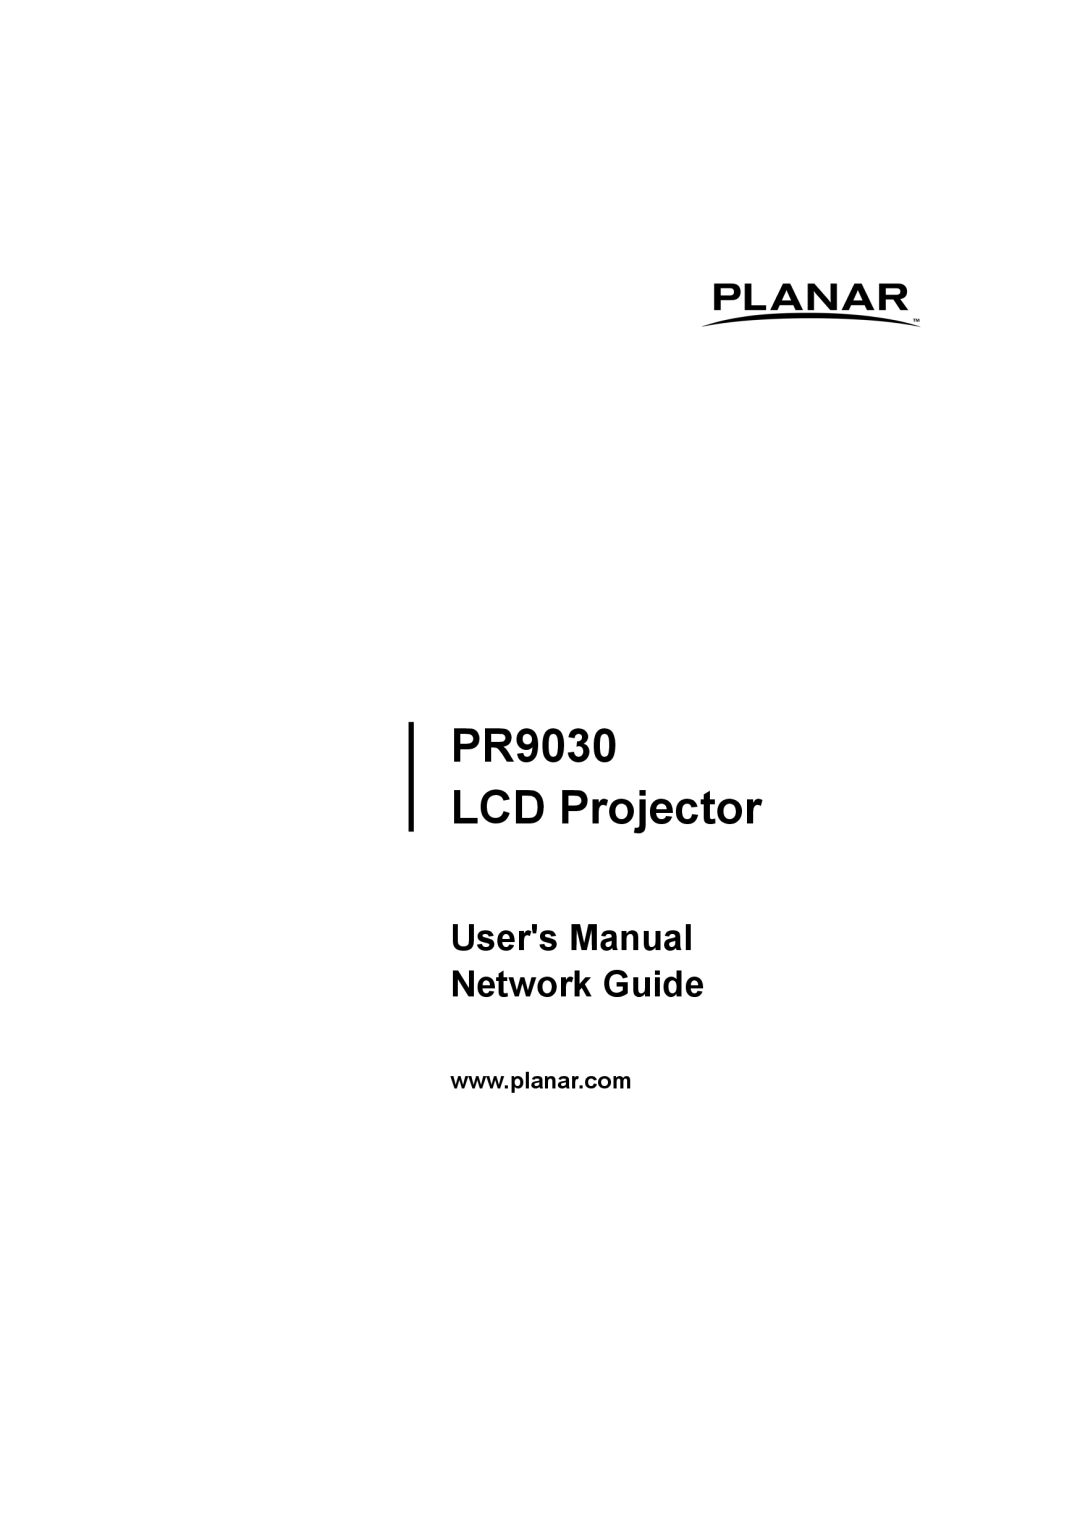 Planar user manual PR9030 LCD Projector, Users Manual Network Guide 